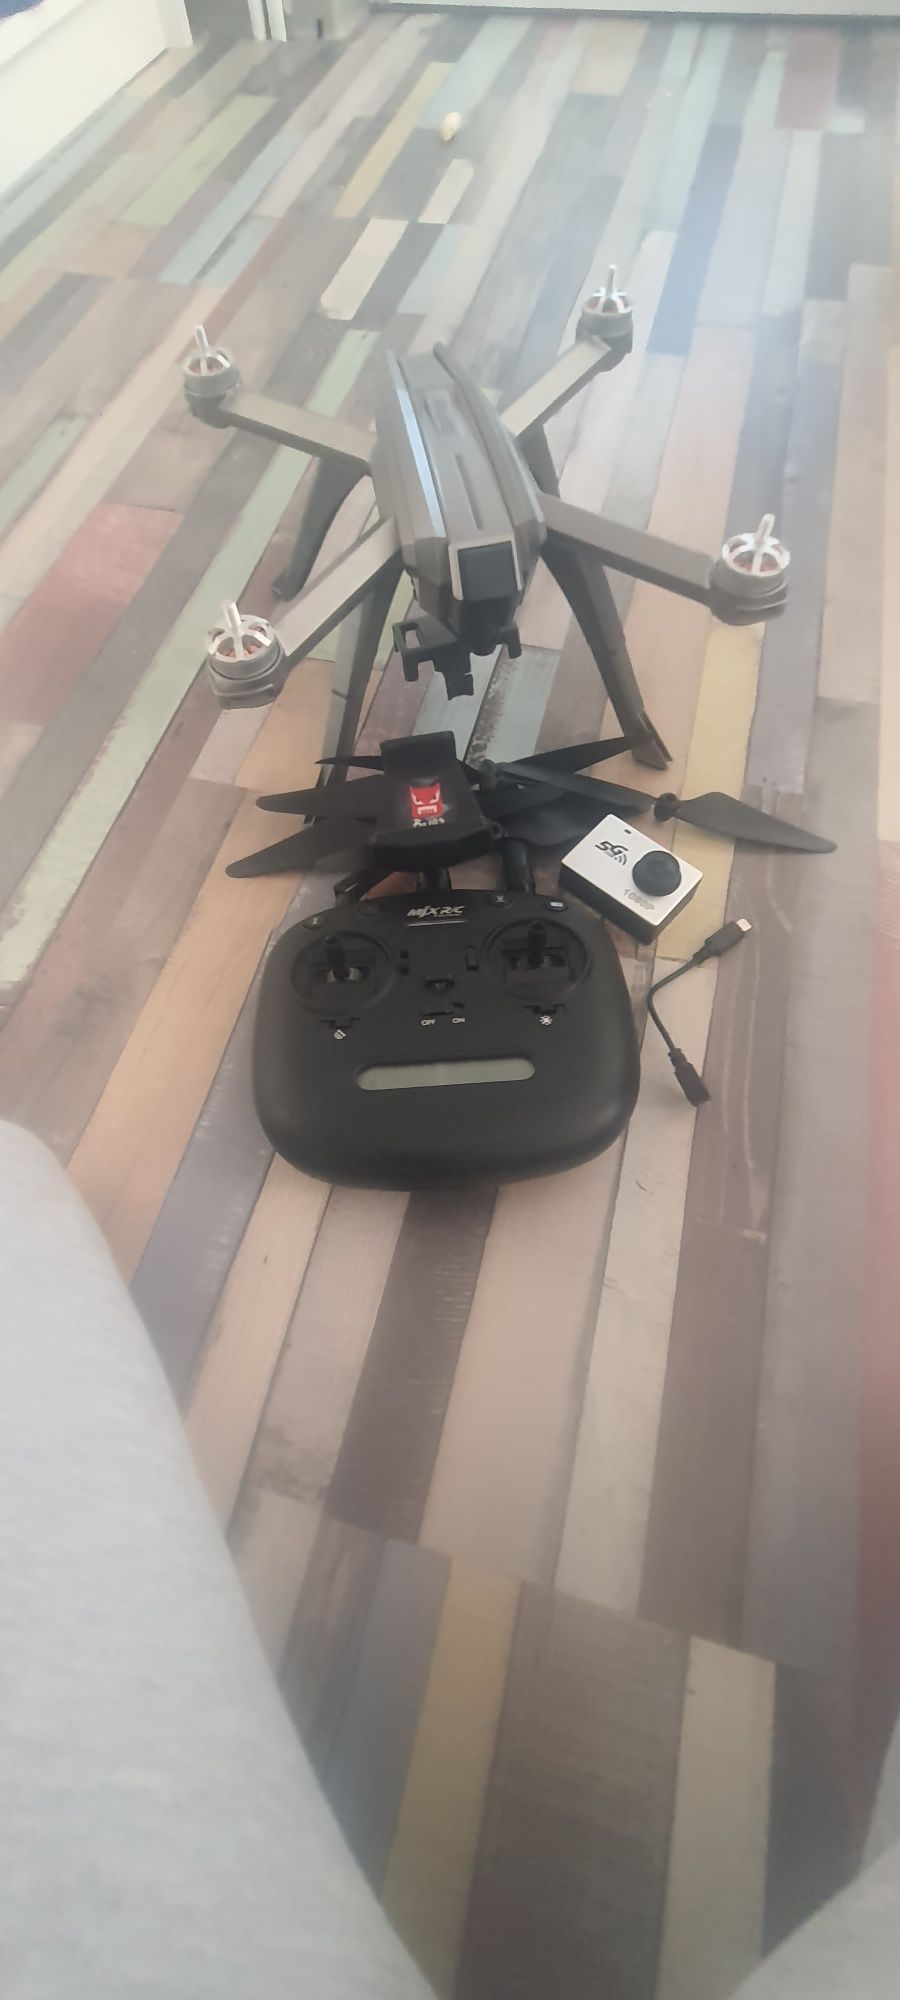 Drona mjx Bugs 3 pro